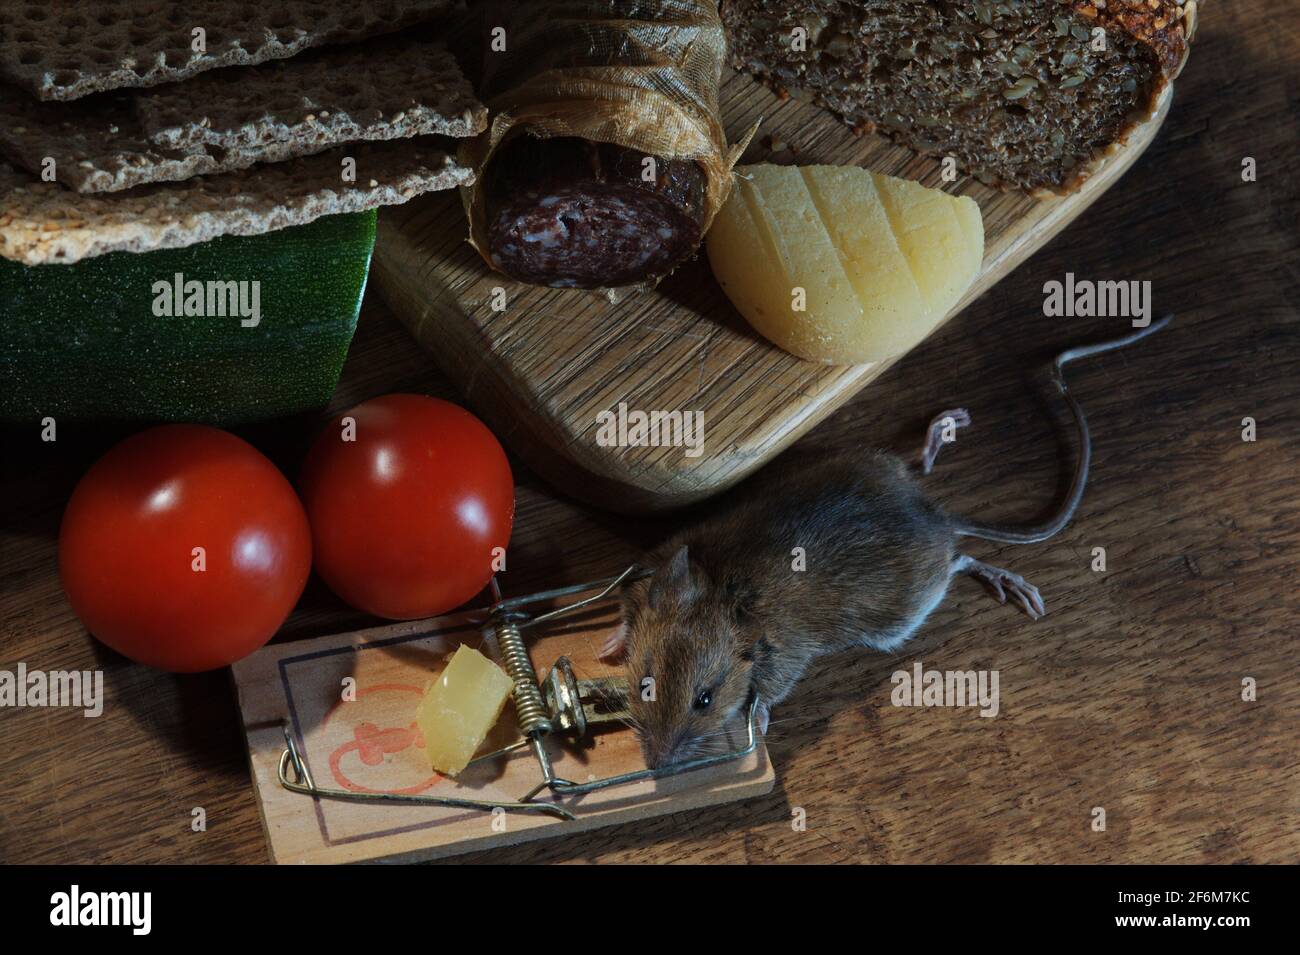 https://c8.alamy.com/comp/2F6M7KC/maus-in-der-mausefalle-gefangen-mouse-caught-in-a-mouse-trap-2F6M7KC.jpg